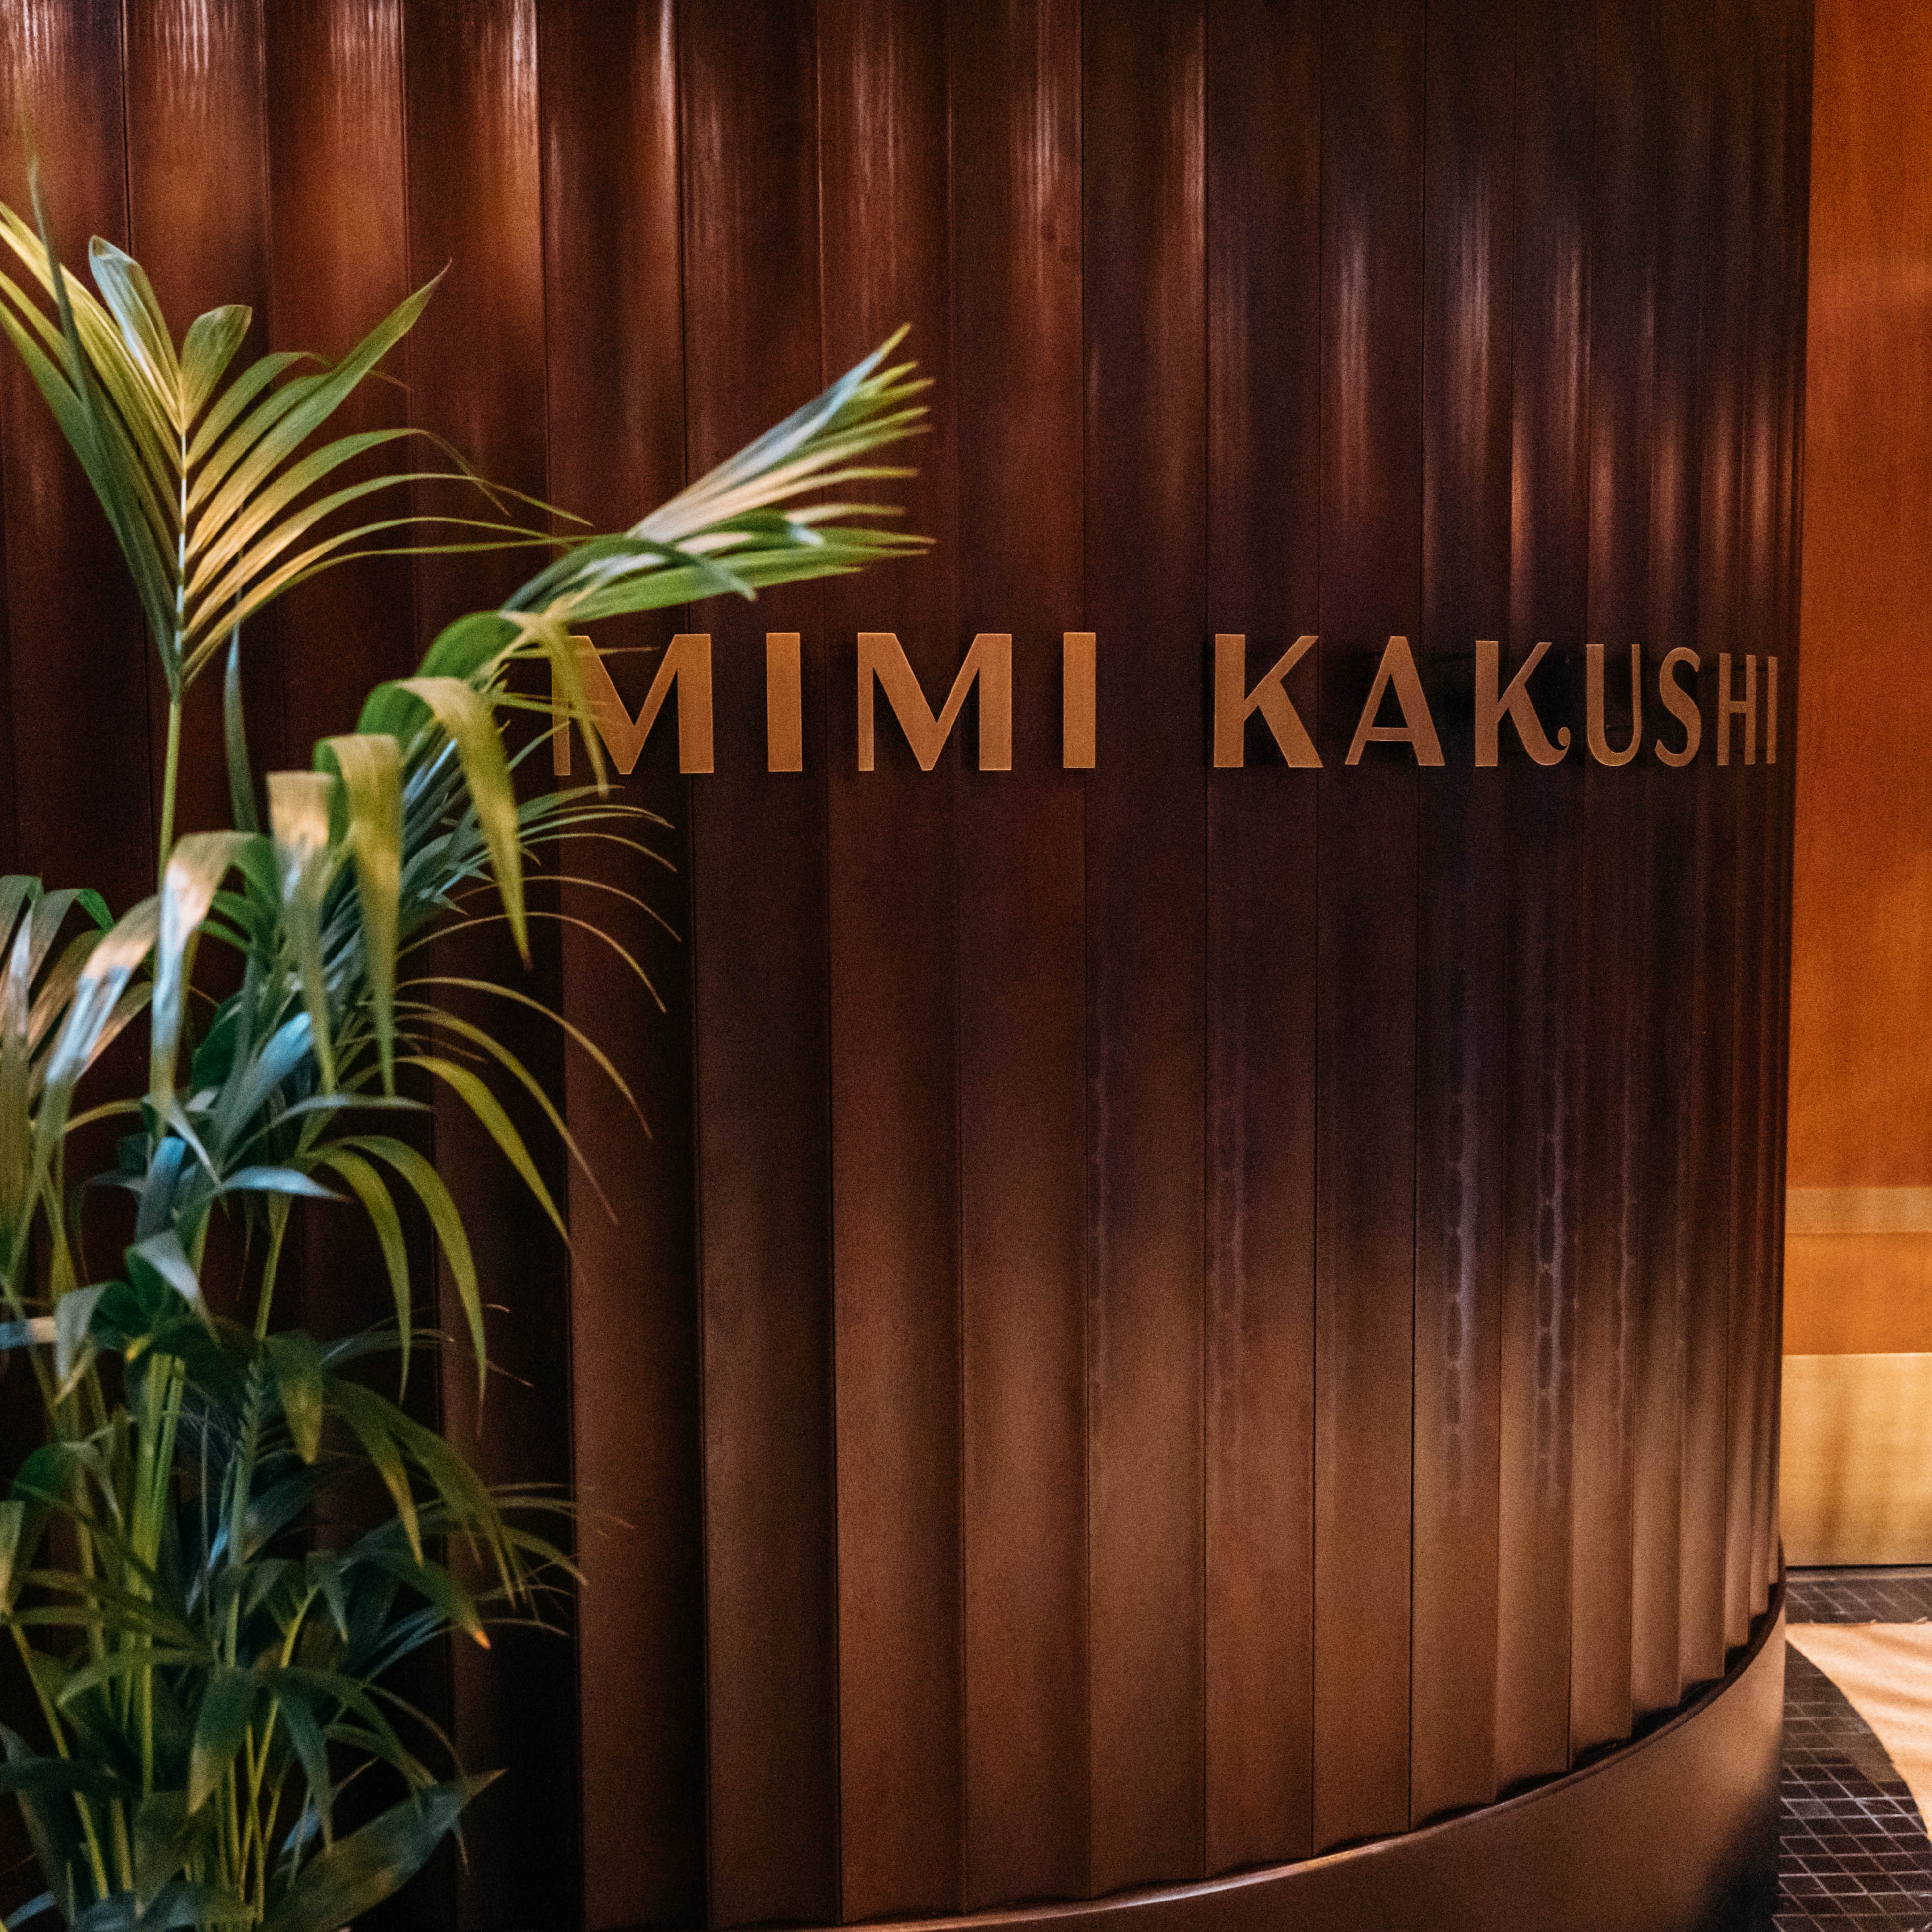 The Stay-Safe Supper Club Mimi Kakushi